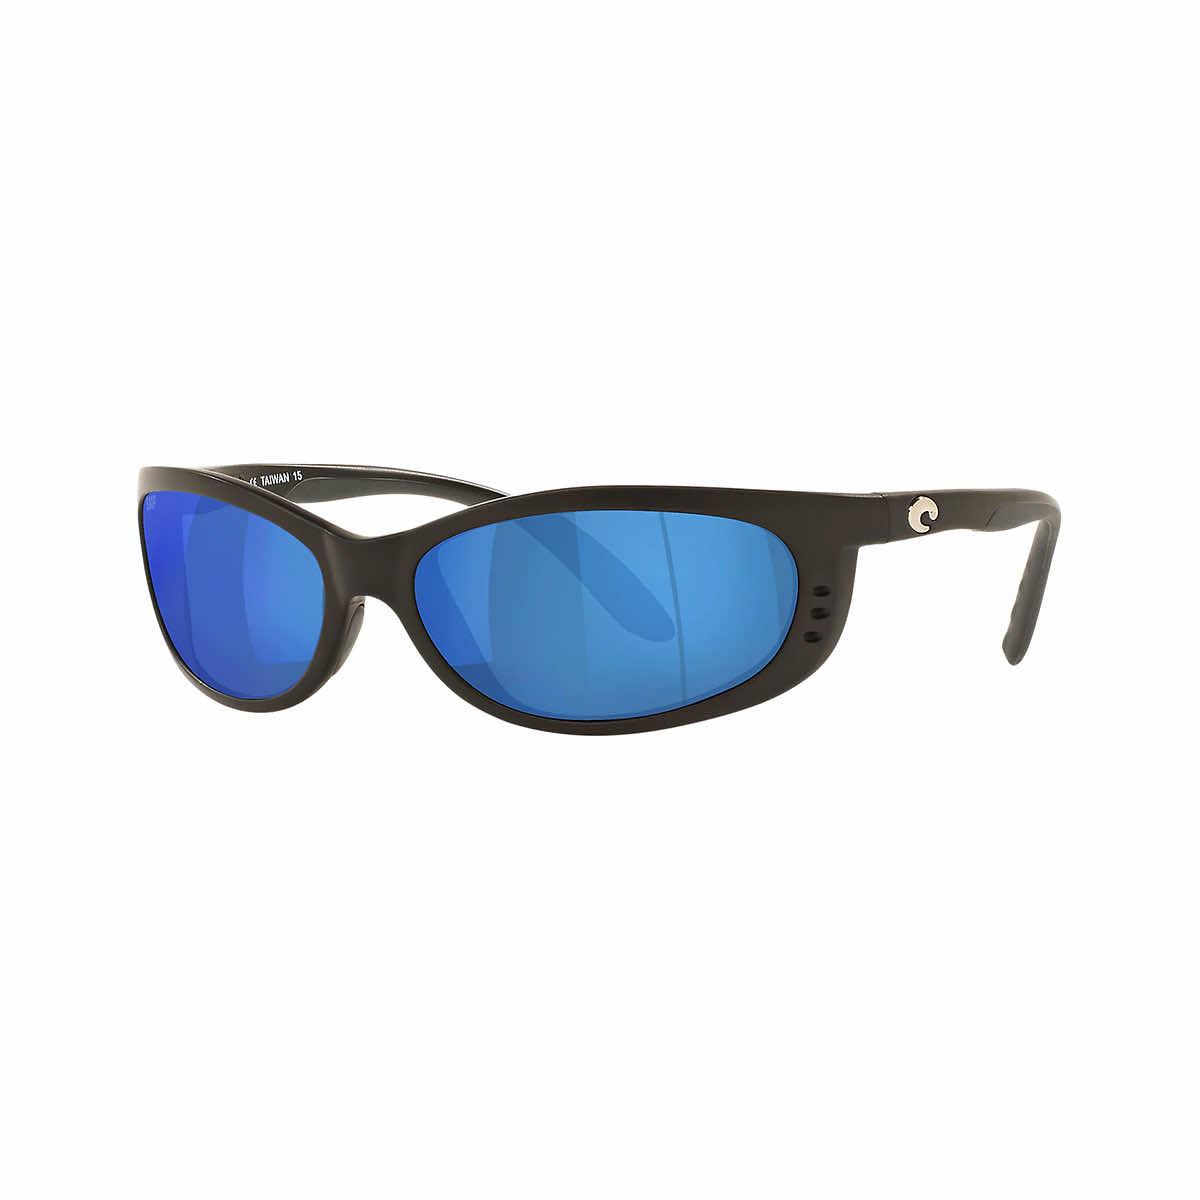  Fathom 580p Sunglasses - Polarized Plastic